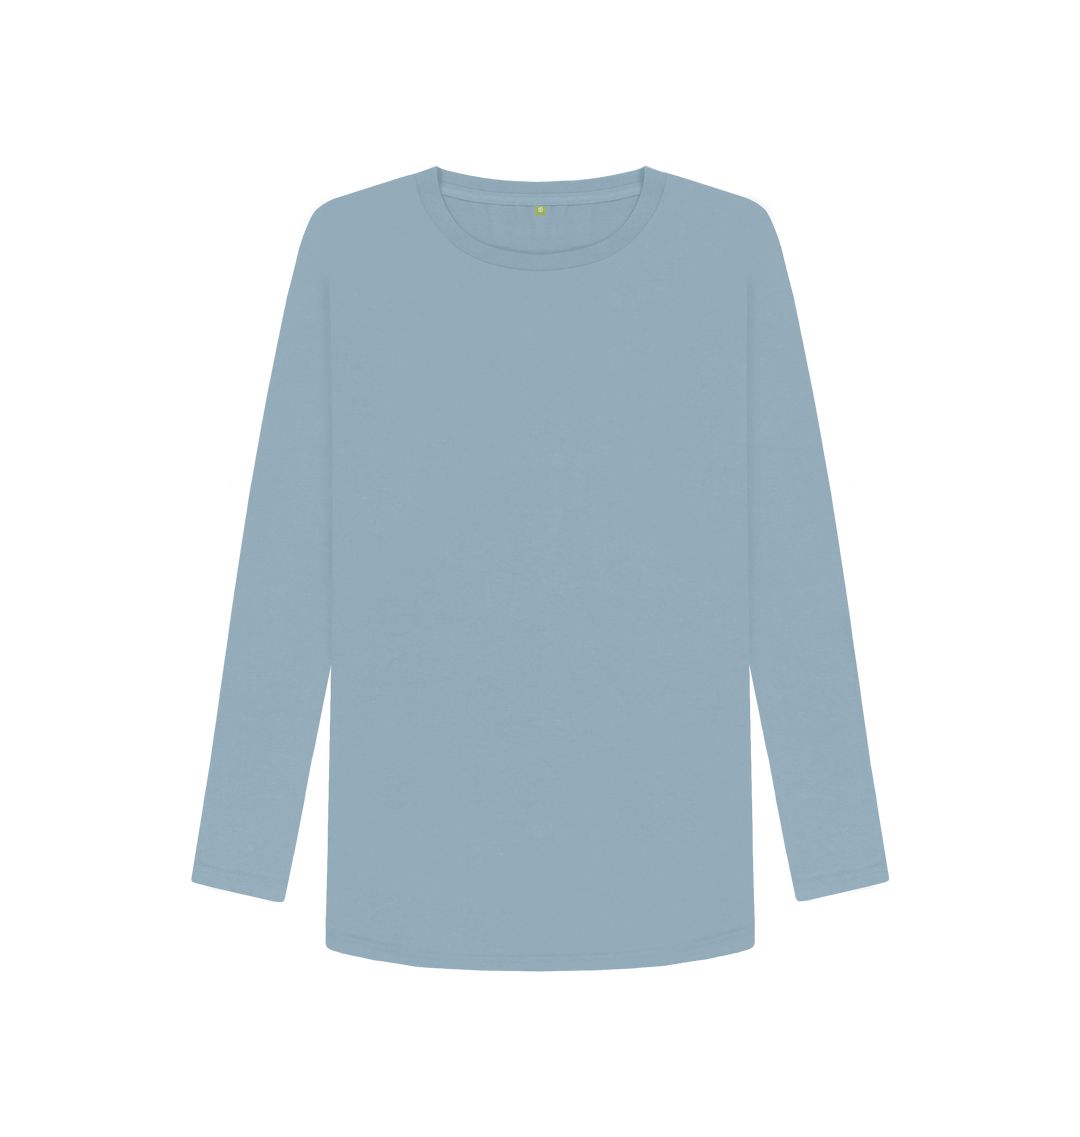 Stone Blue Women's organic cotton long sleeve t-shirt